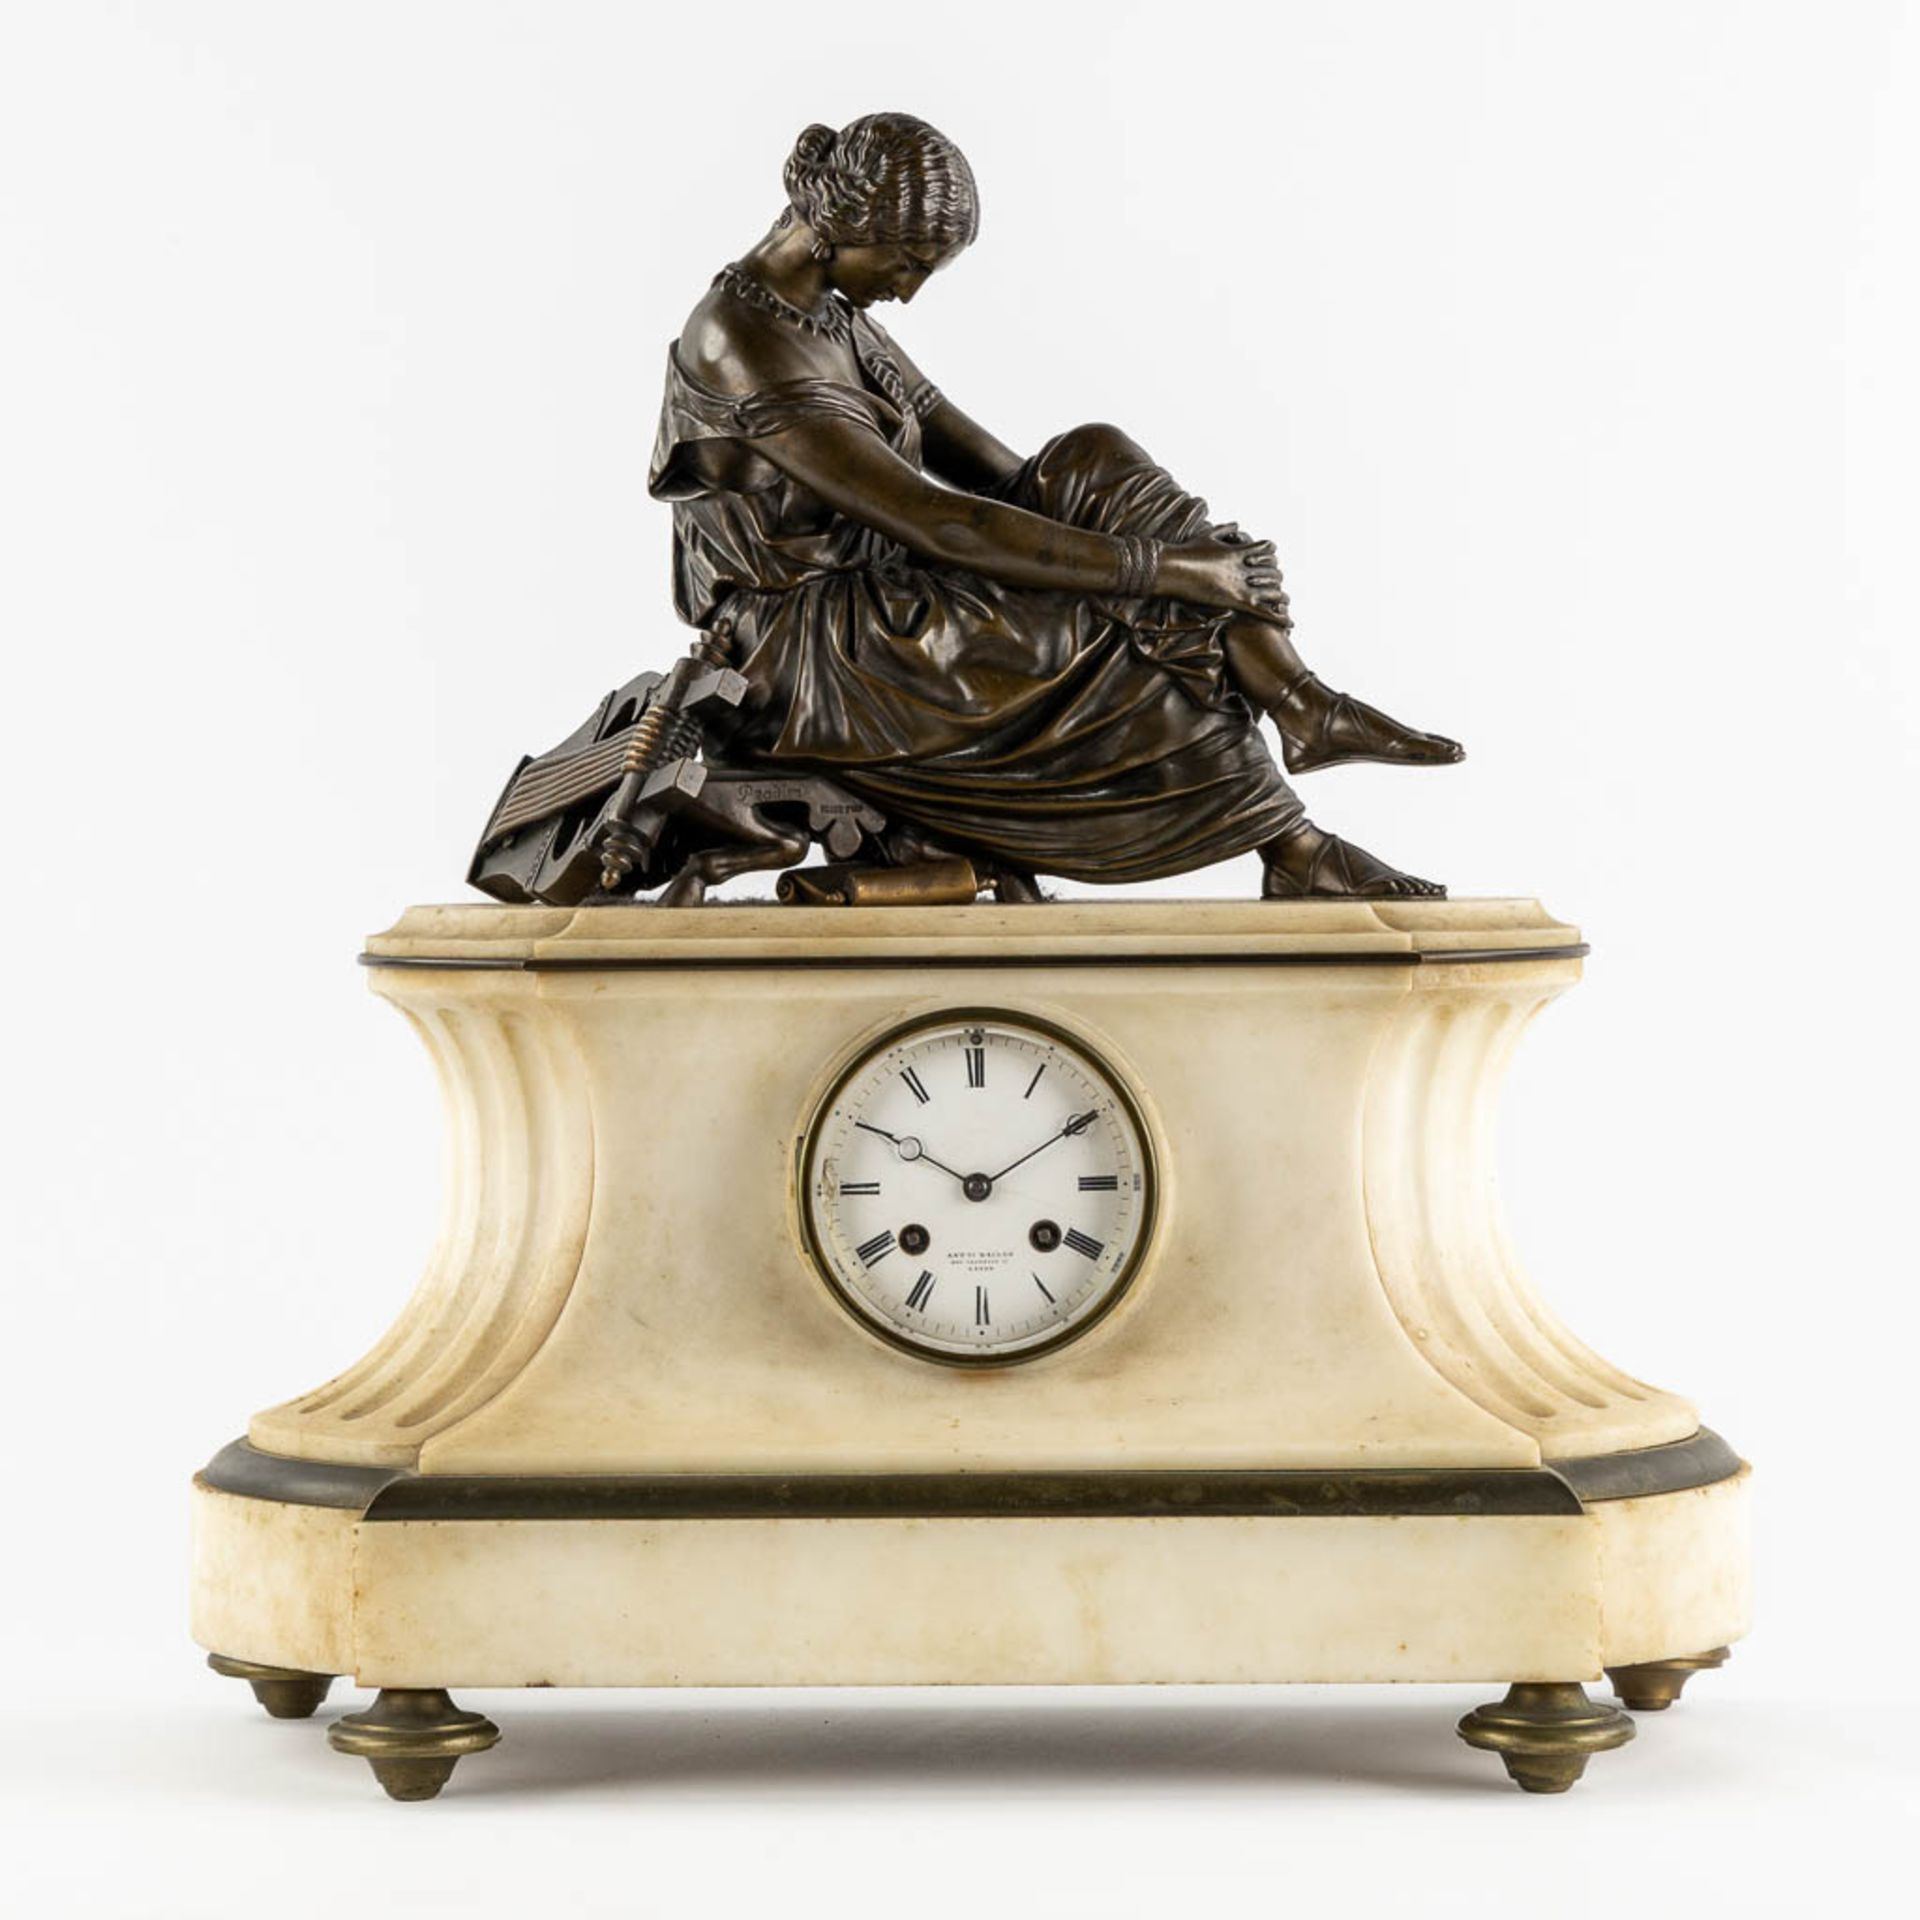 James PRADIER (1790-1852) 'Mantle Clock', patinated bronze on White Carrara marble. (L:21 x W:45 x H